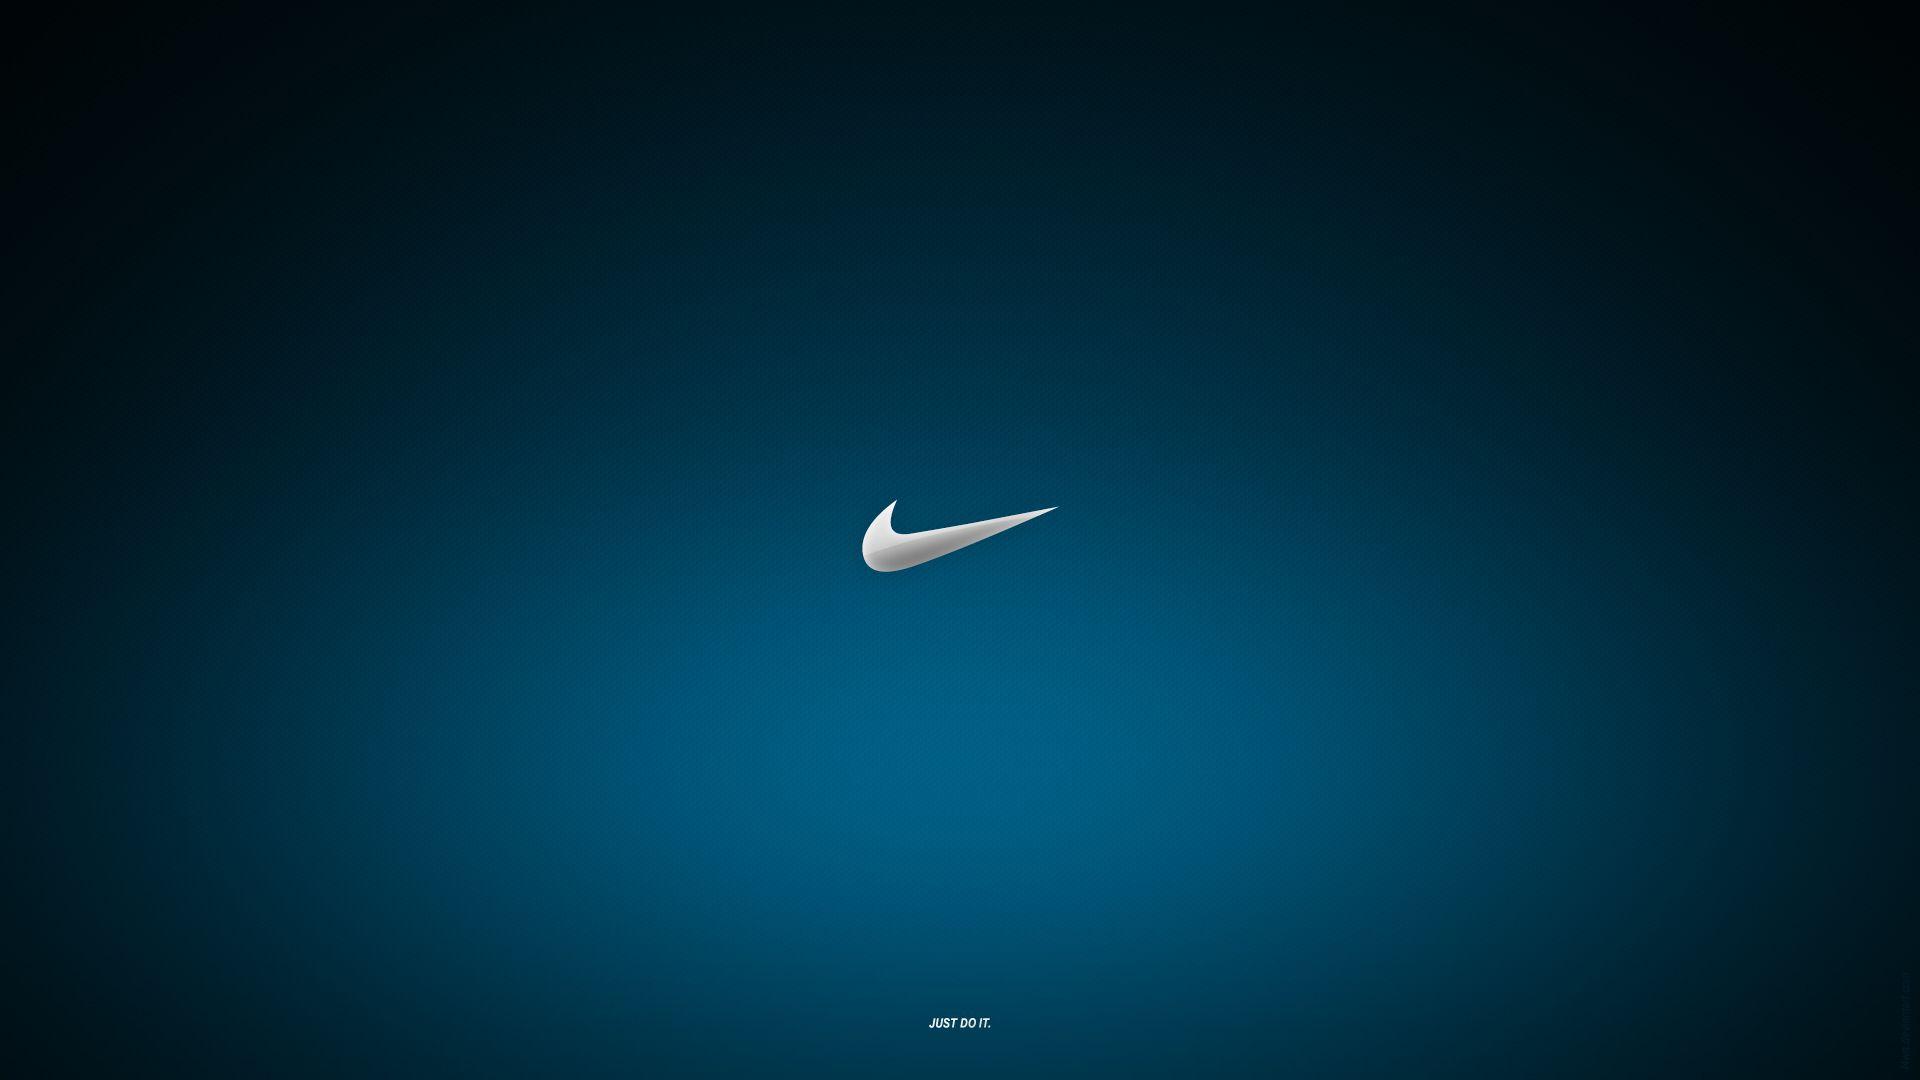 Nike Wallpaper full HD. Wallpaper, Background, Image, Art Photo